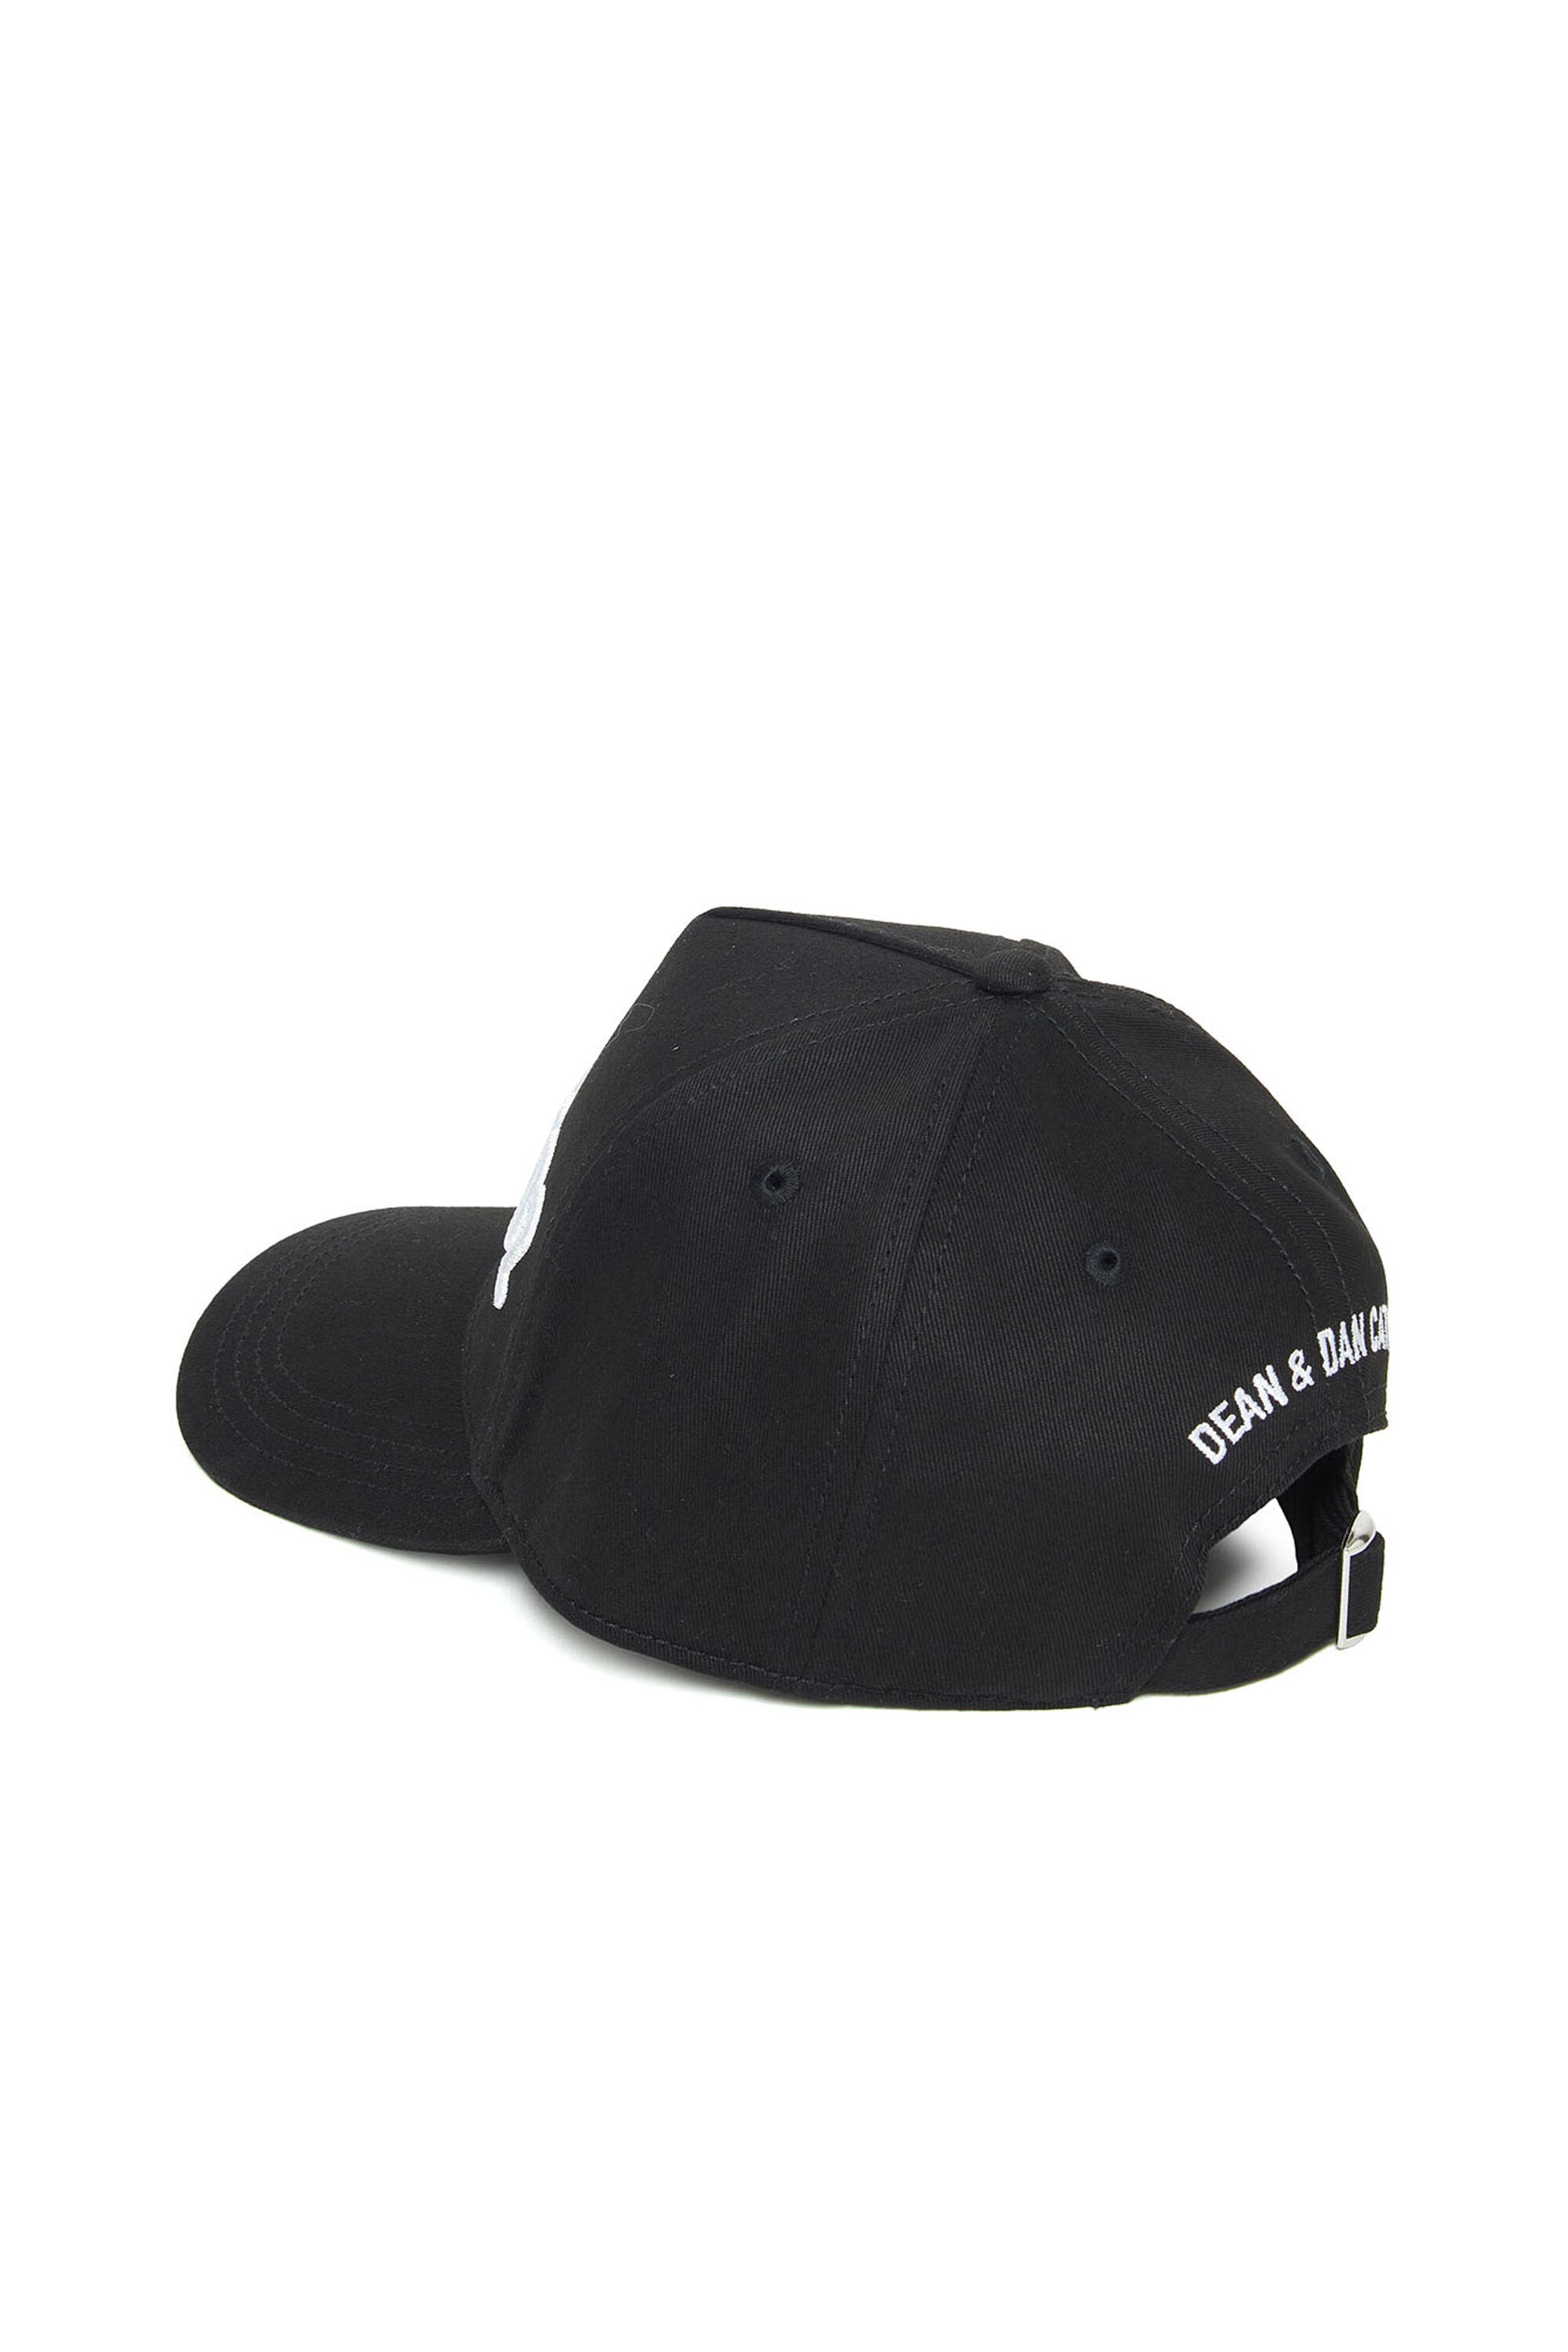 Black gabardine baseball cap with logo